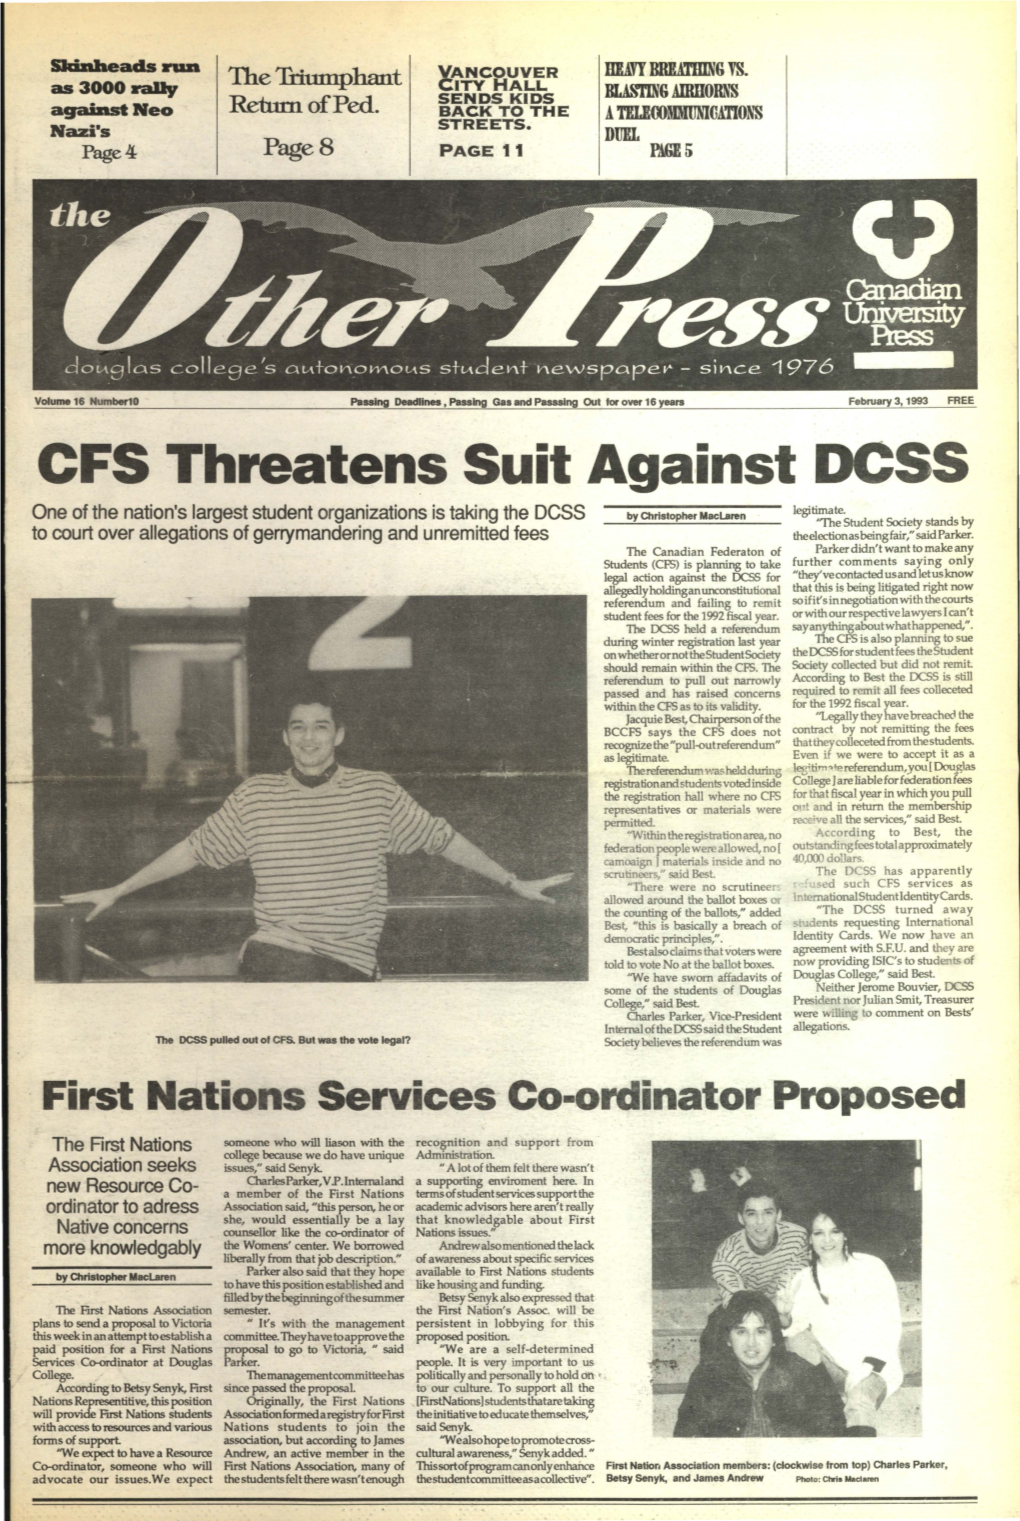 CFS Threatens Suit Against DCSS